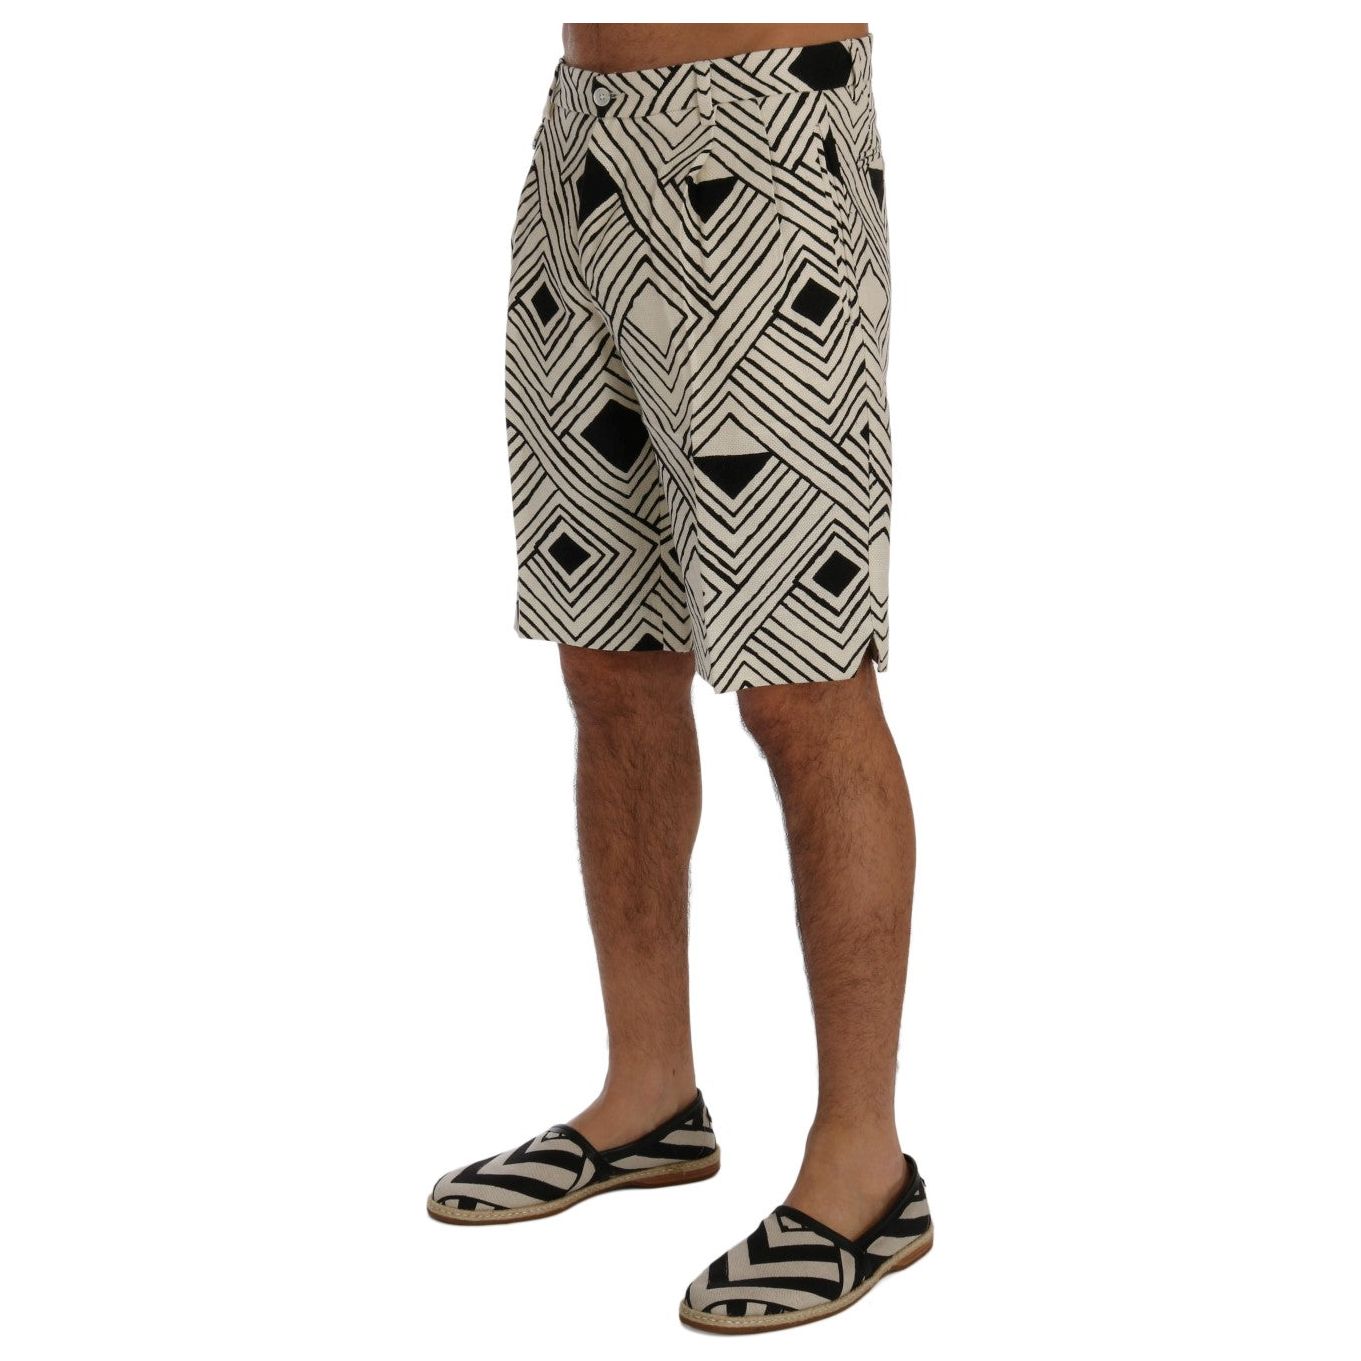 Dolce & GabbanaChic Striped Casual Shorts - Hemp & Linen BlendMcRichard Designer Brands£249.00